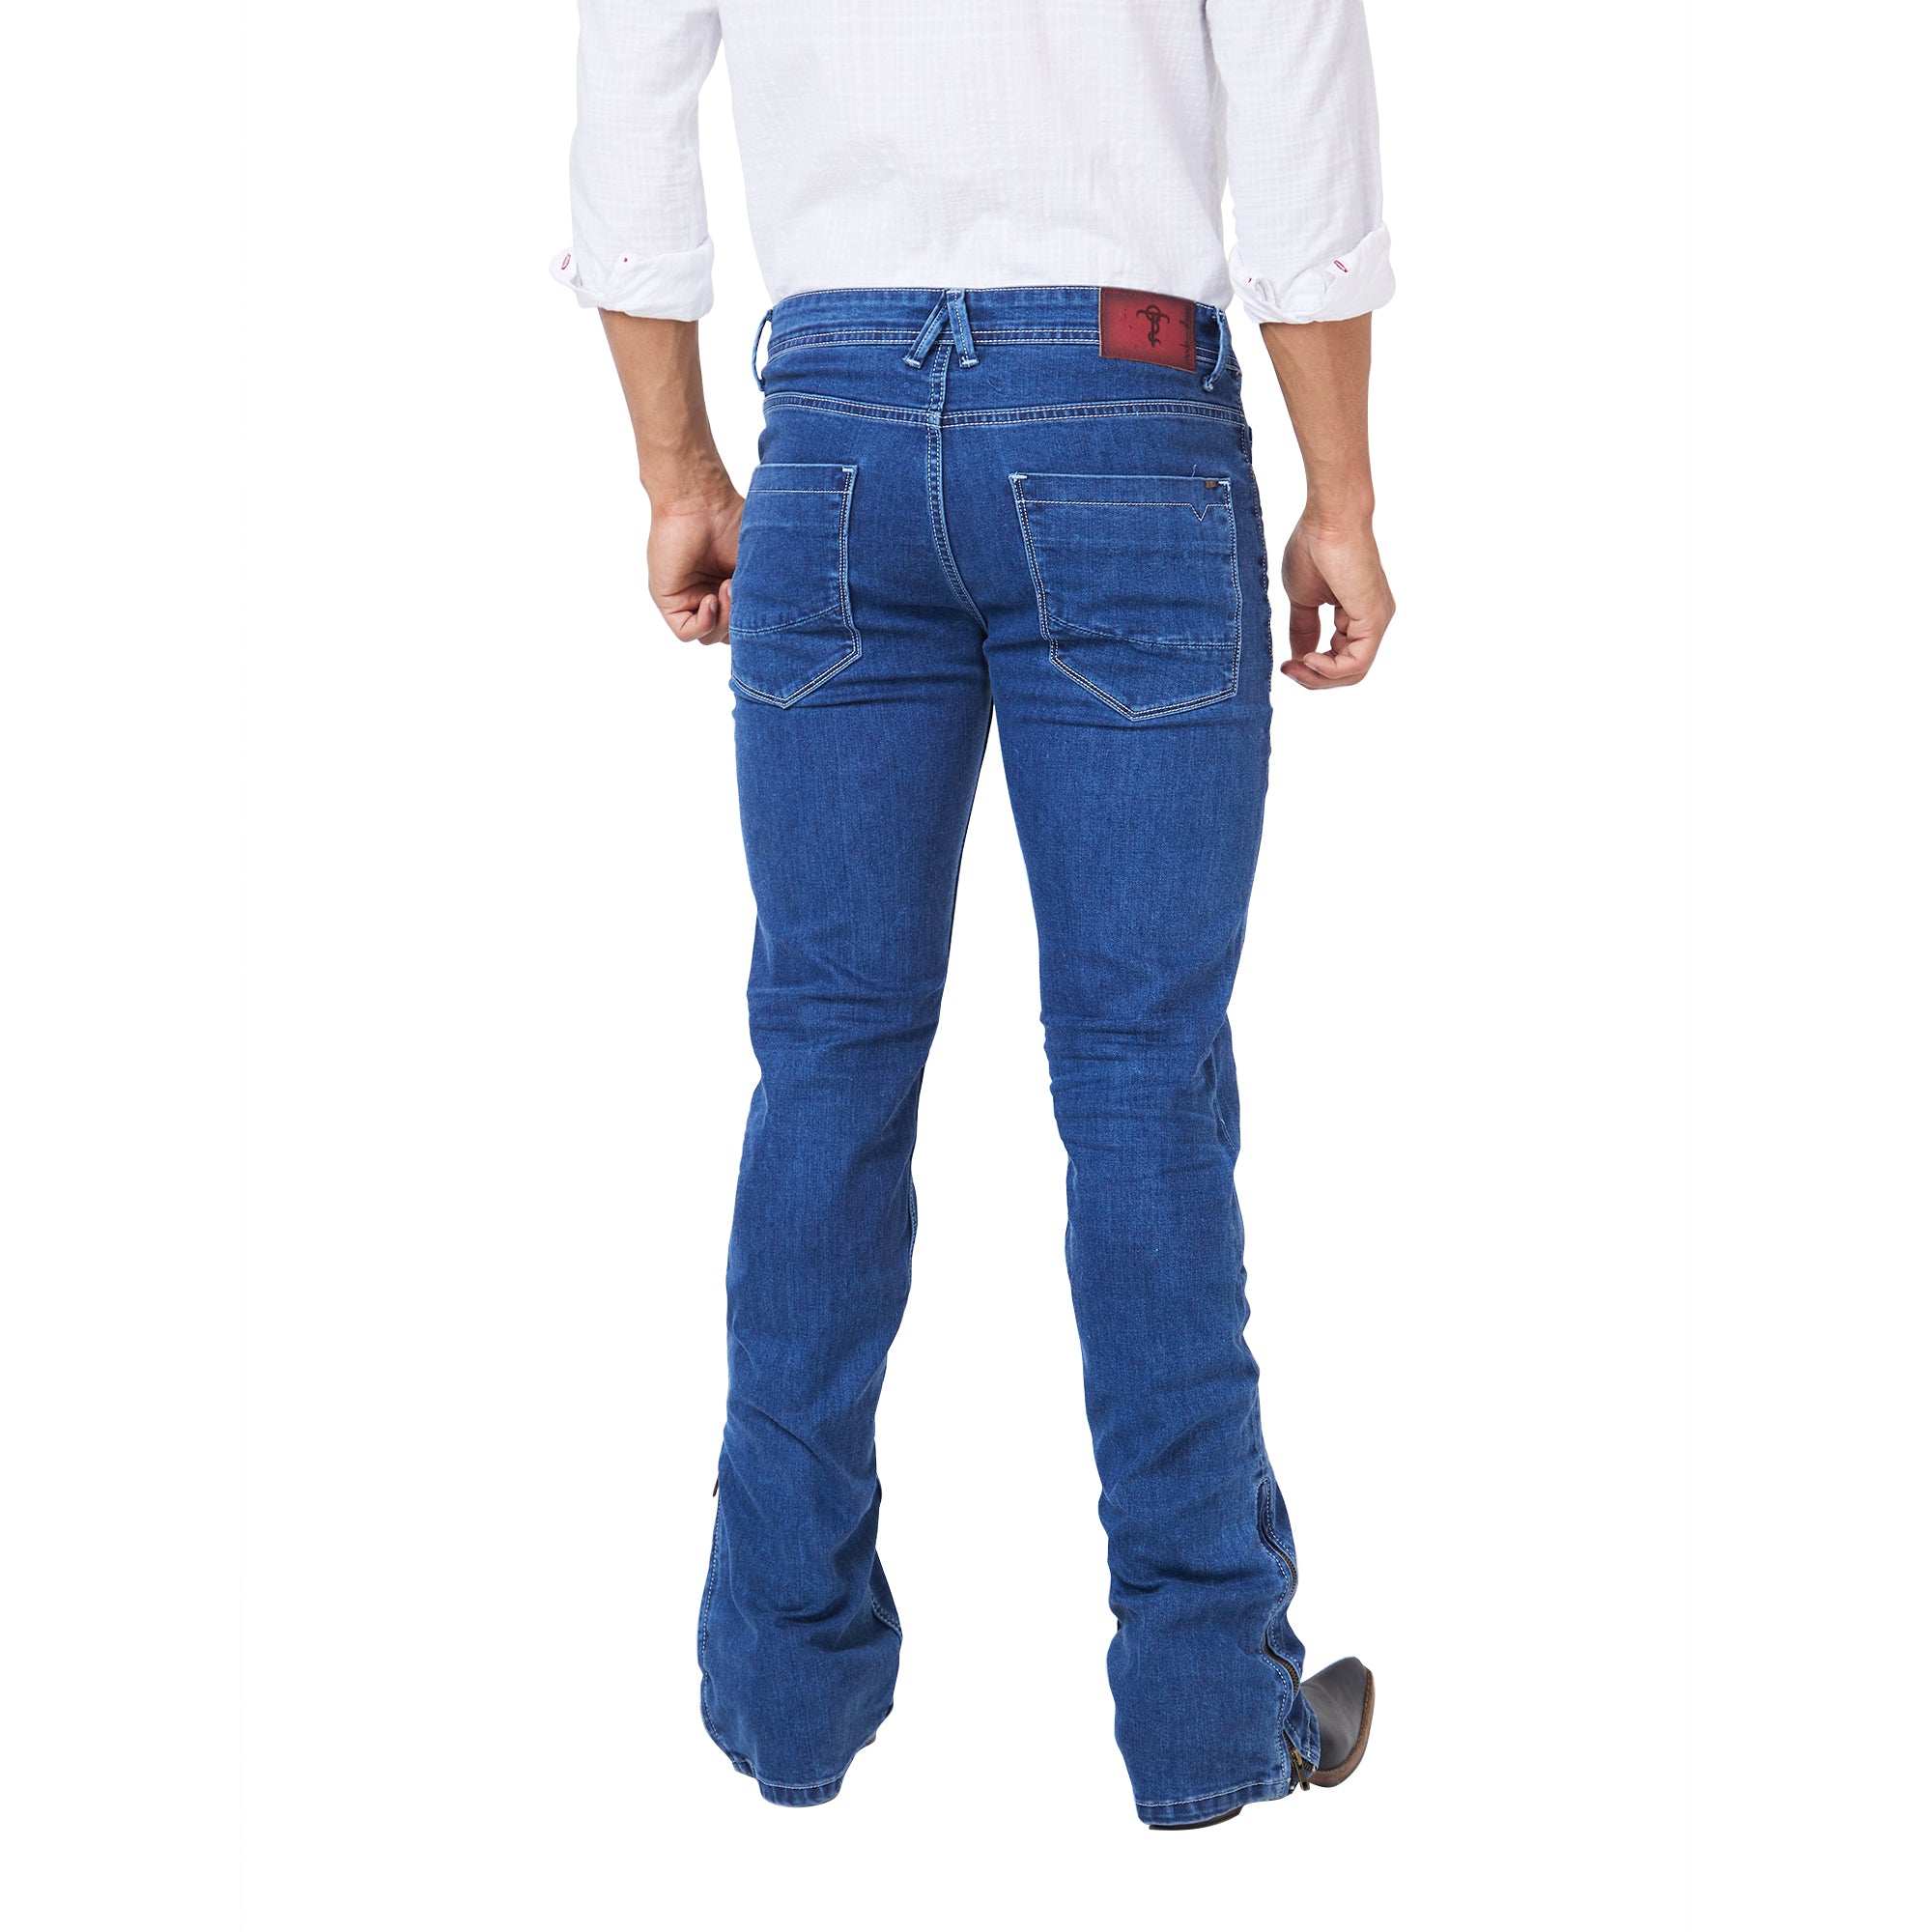 Men's Casual Regular Fit Solid Denim Boot-cut Jeans